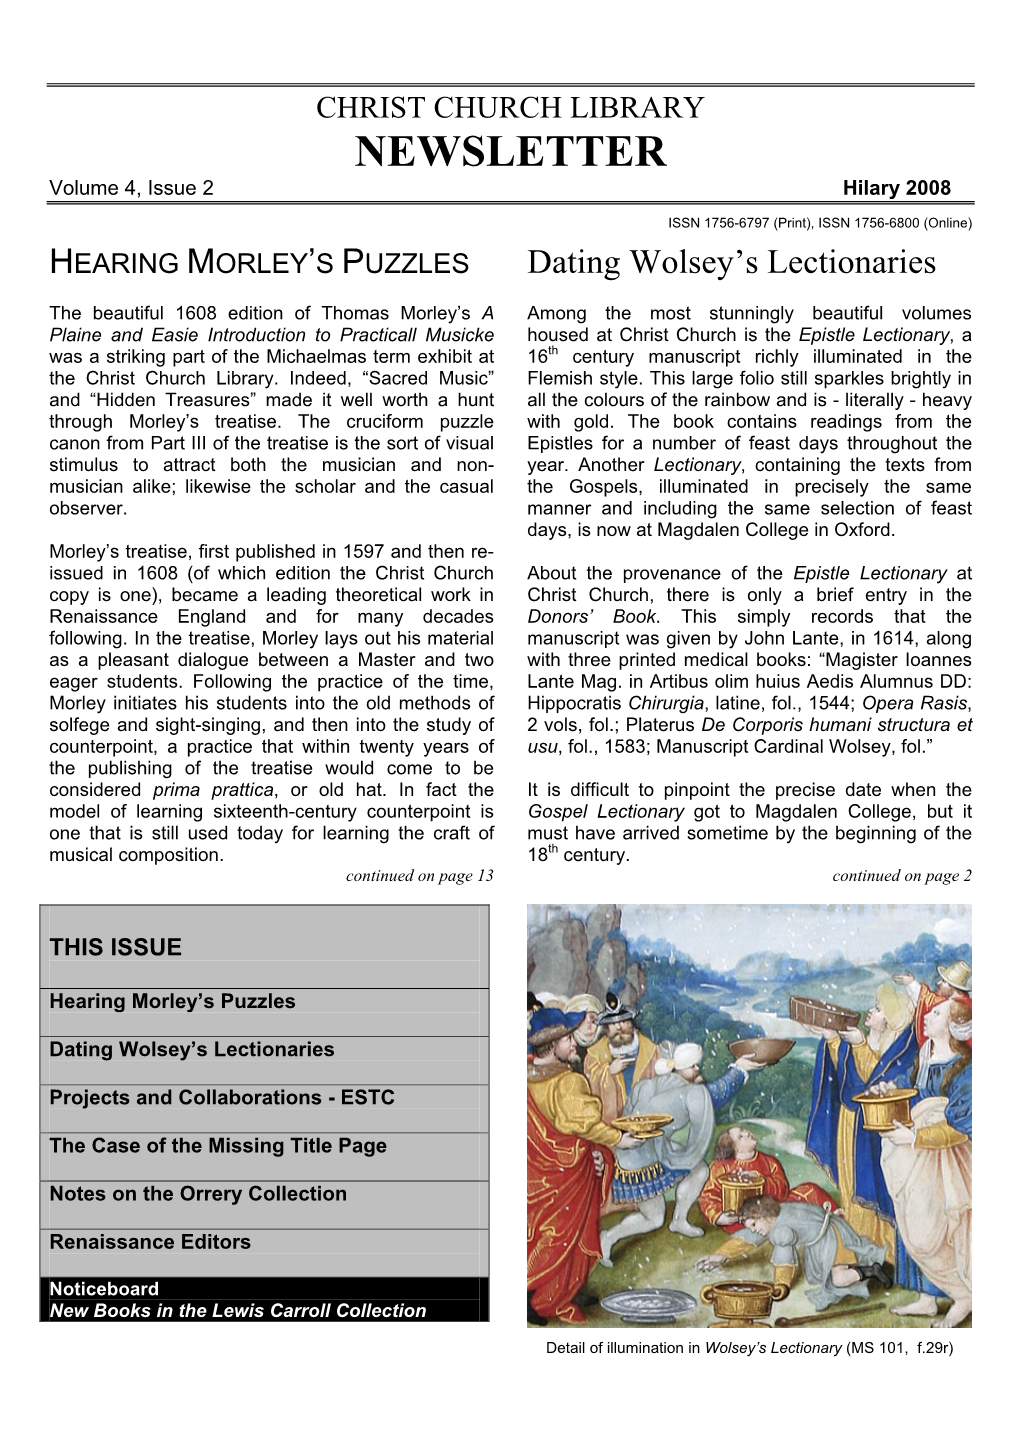 CHRIST CHURCH LIBRARY NEWSLETTER Volume 4, Issue 2 Hilary 2008